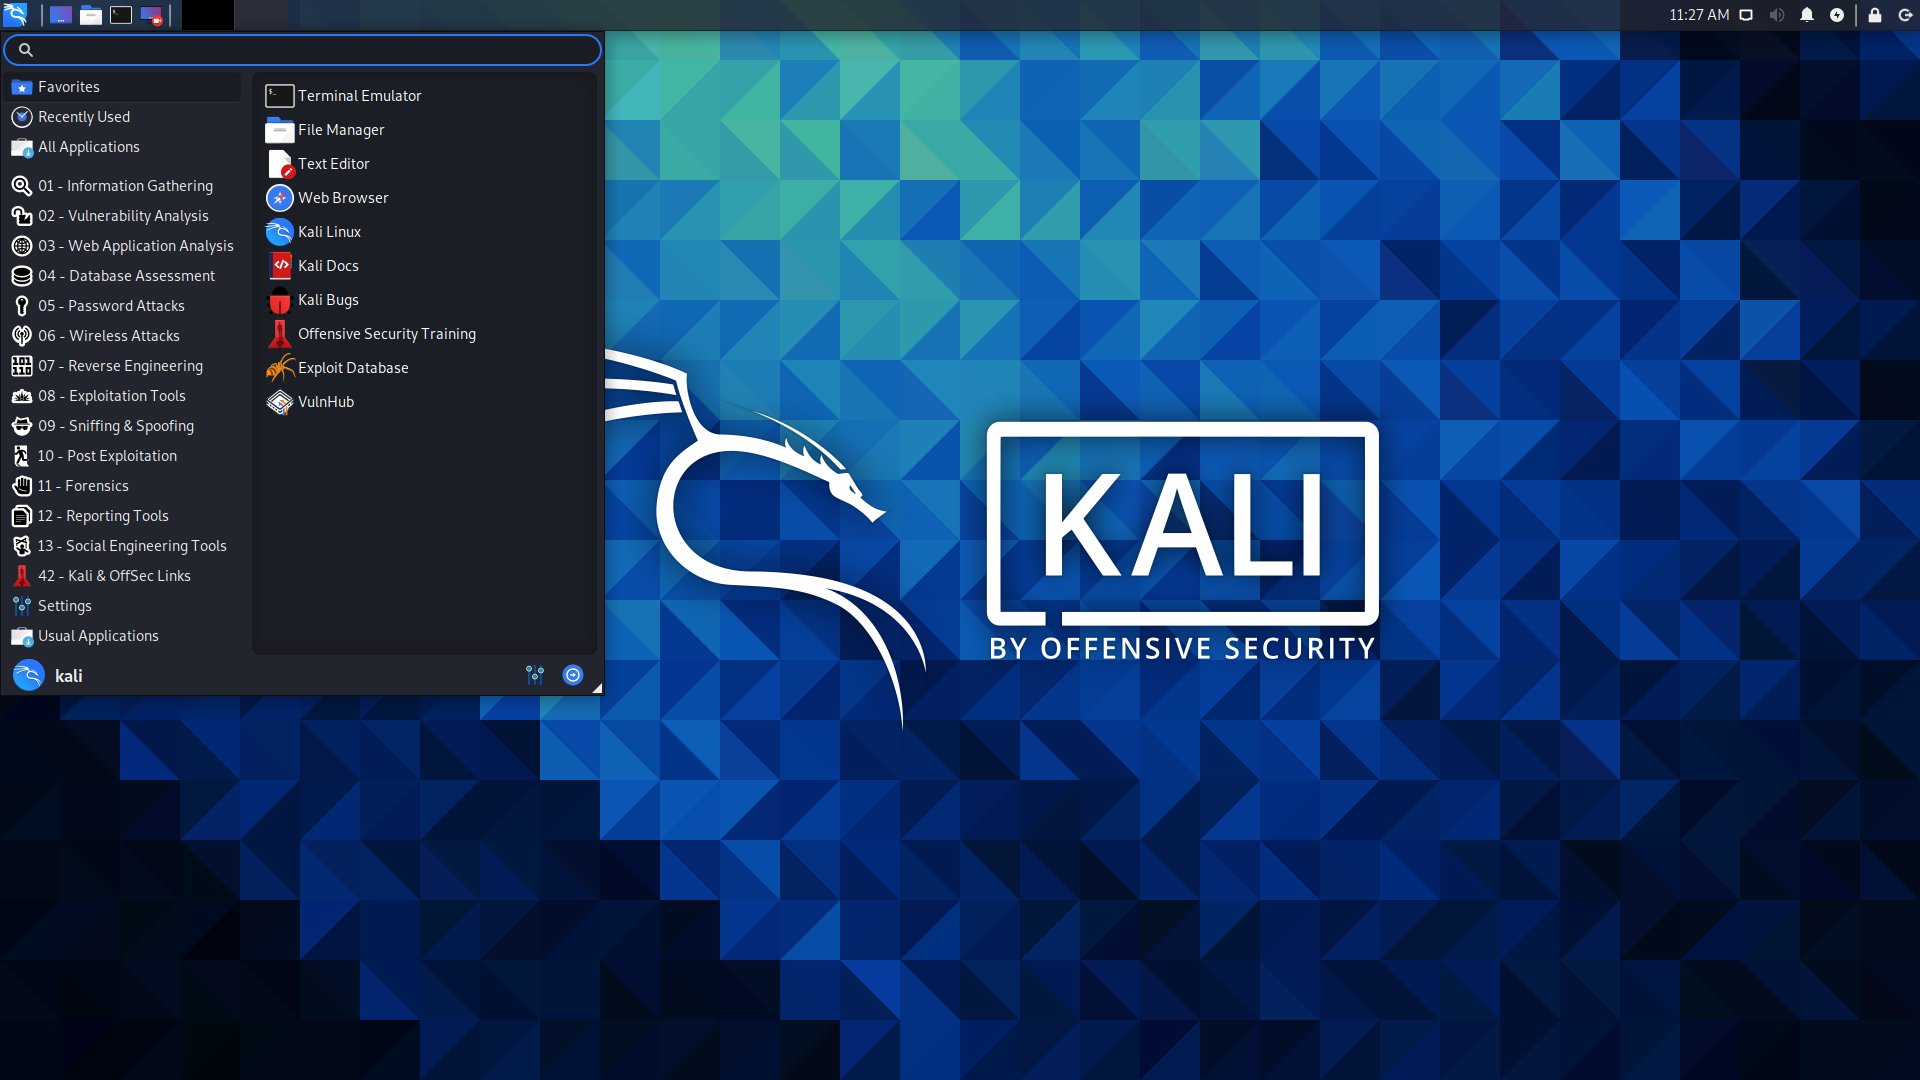 Kali Linux als Test Engineering Umgebung